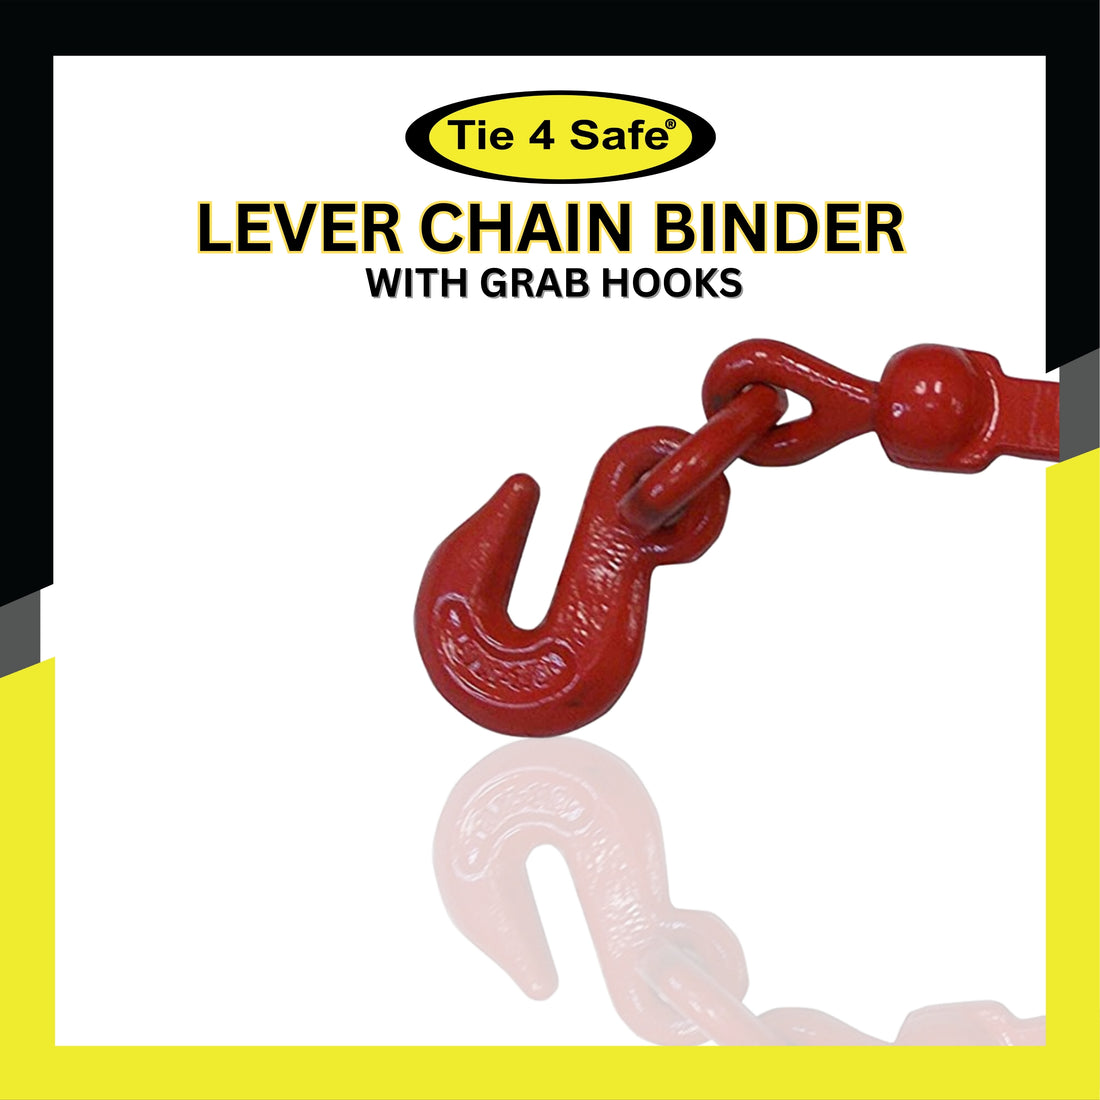 Lever Chain Load Binders